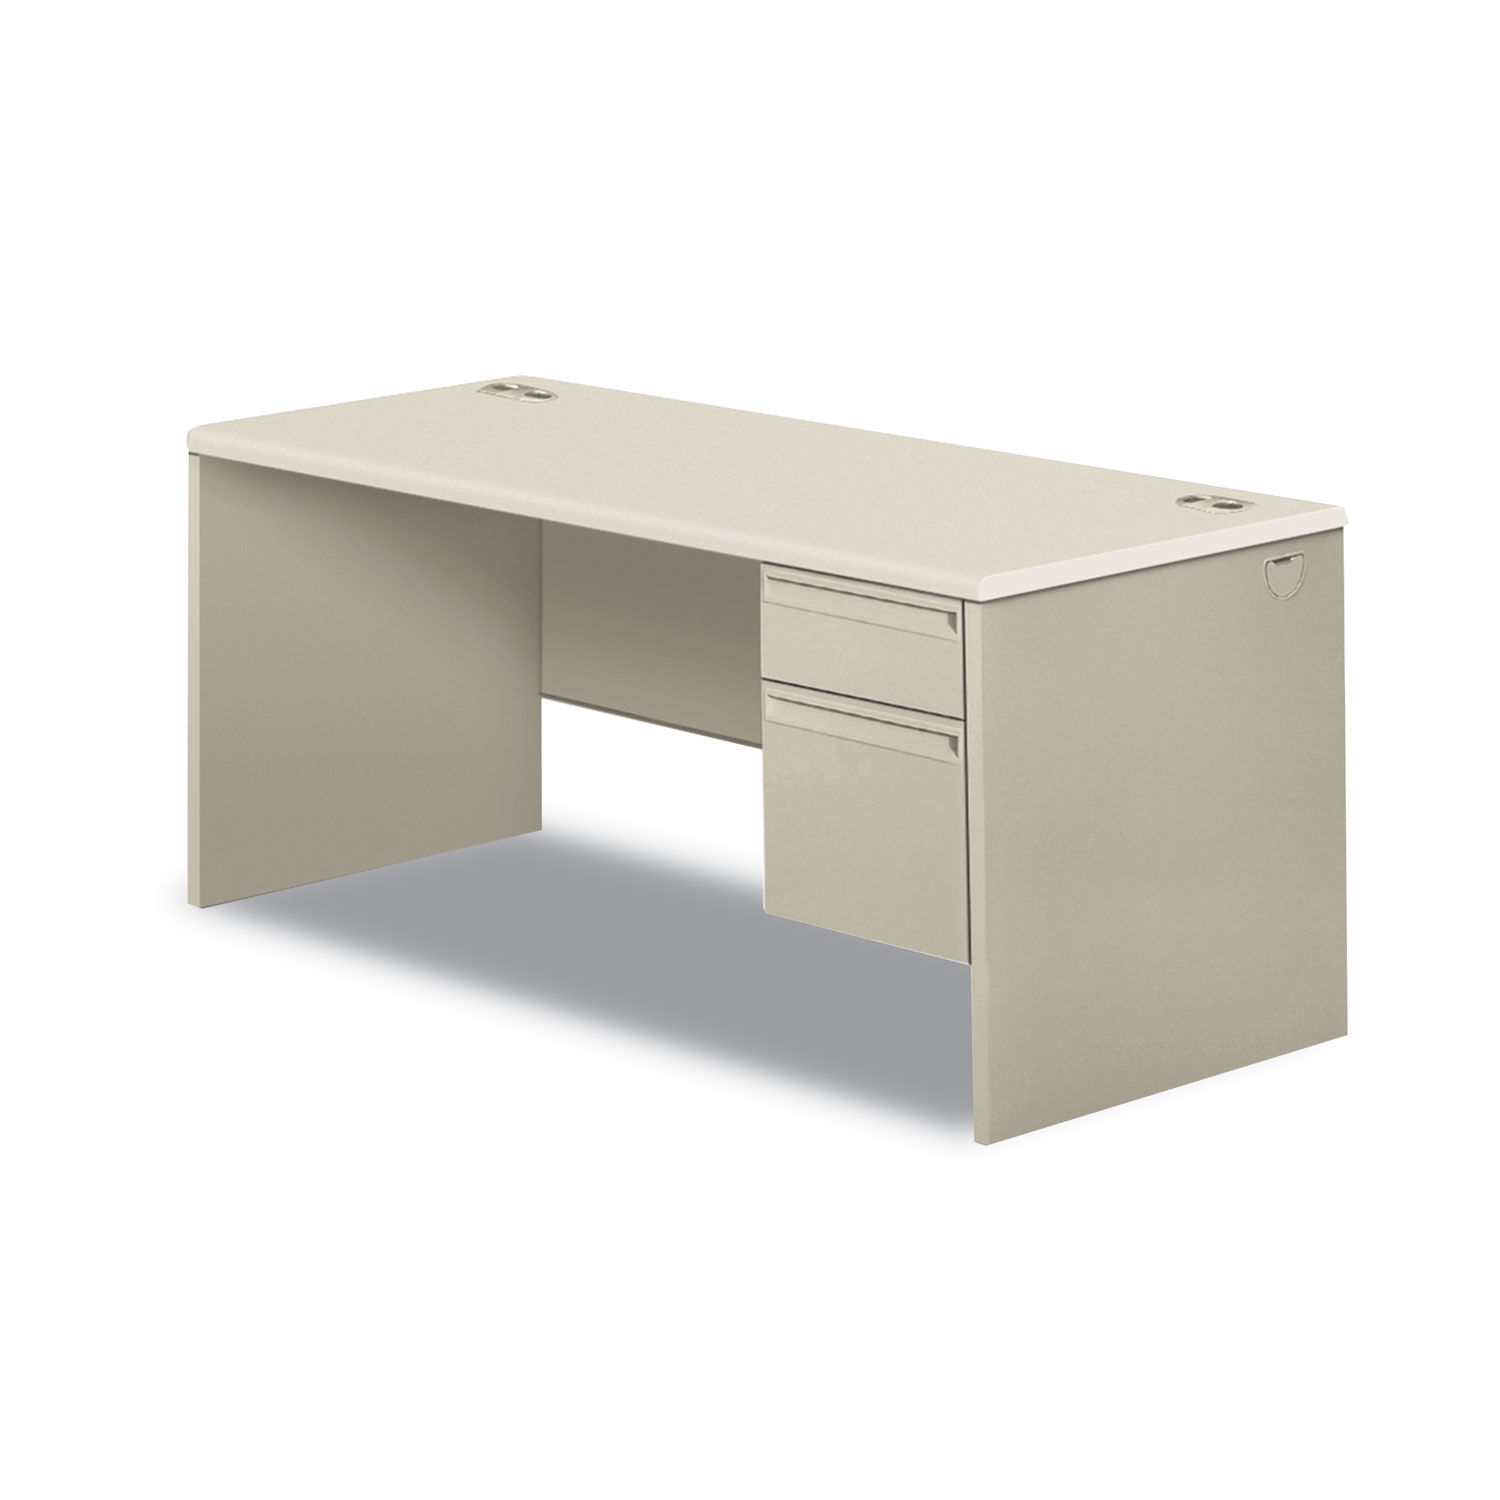 38000 Series Right Pedestal Desk 66" x 30" x 30", Light Gray/Silver